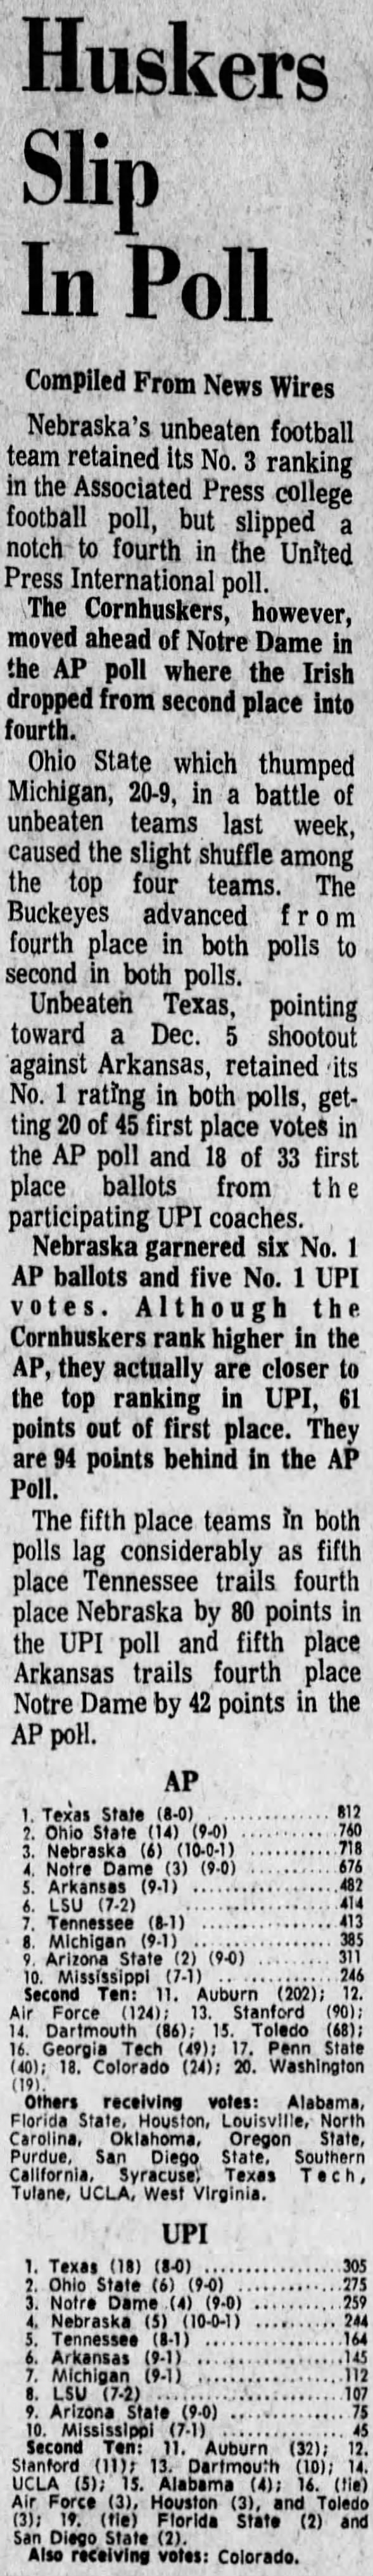 1970.11.24 College football polls